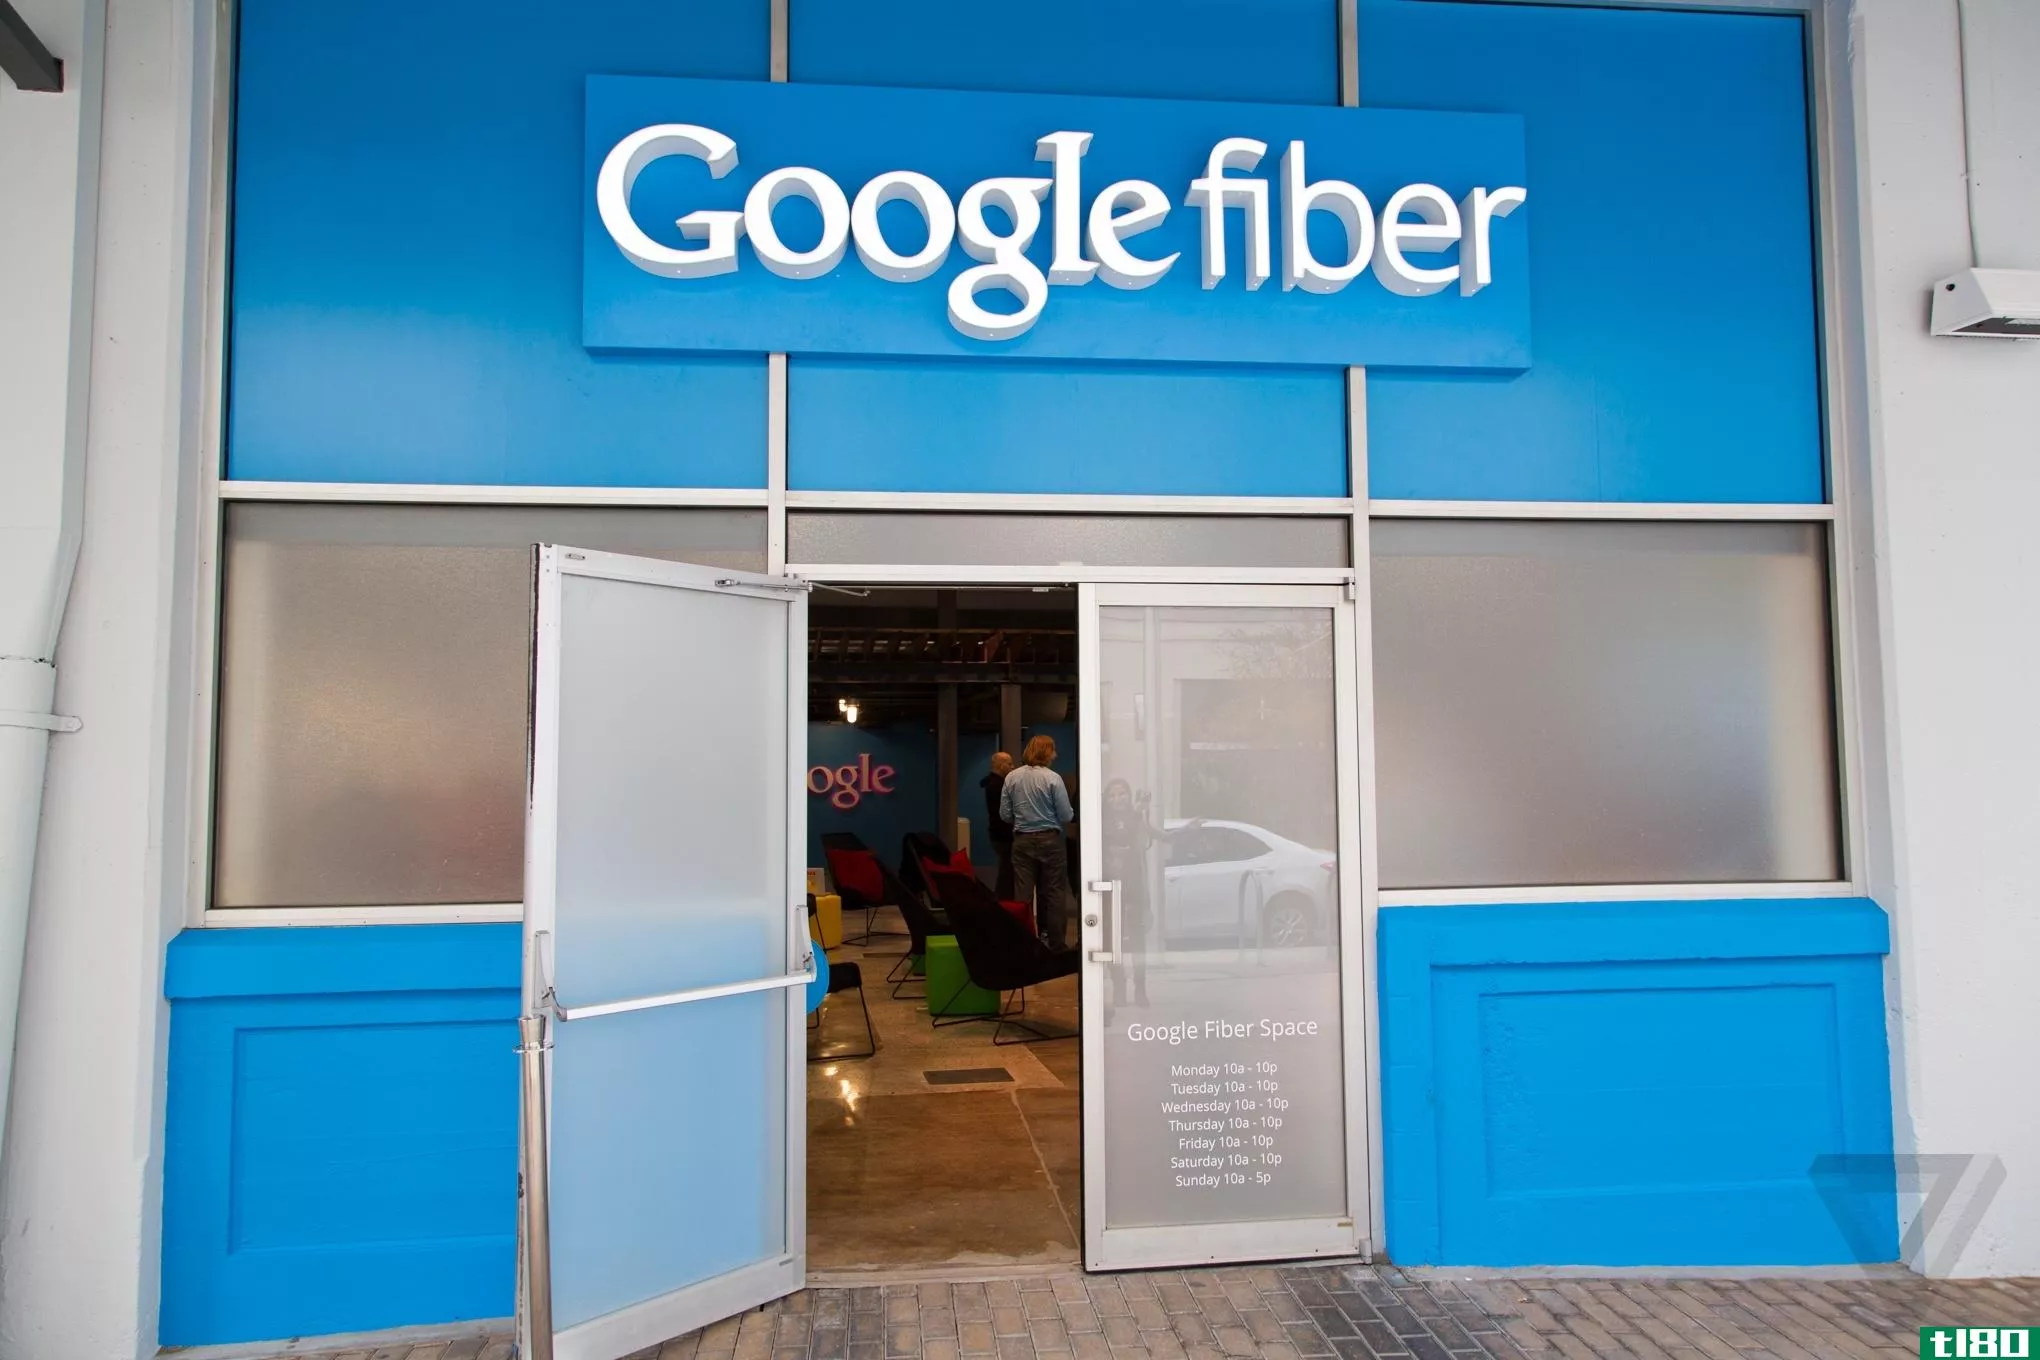 googlefiber将达拉斯命名为最新的超高速互联网“潜力”城市